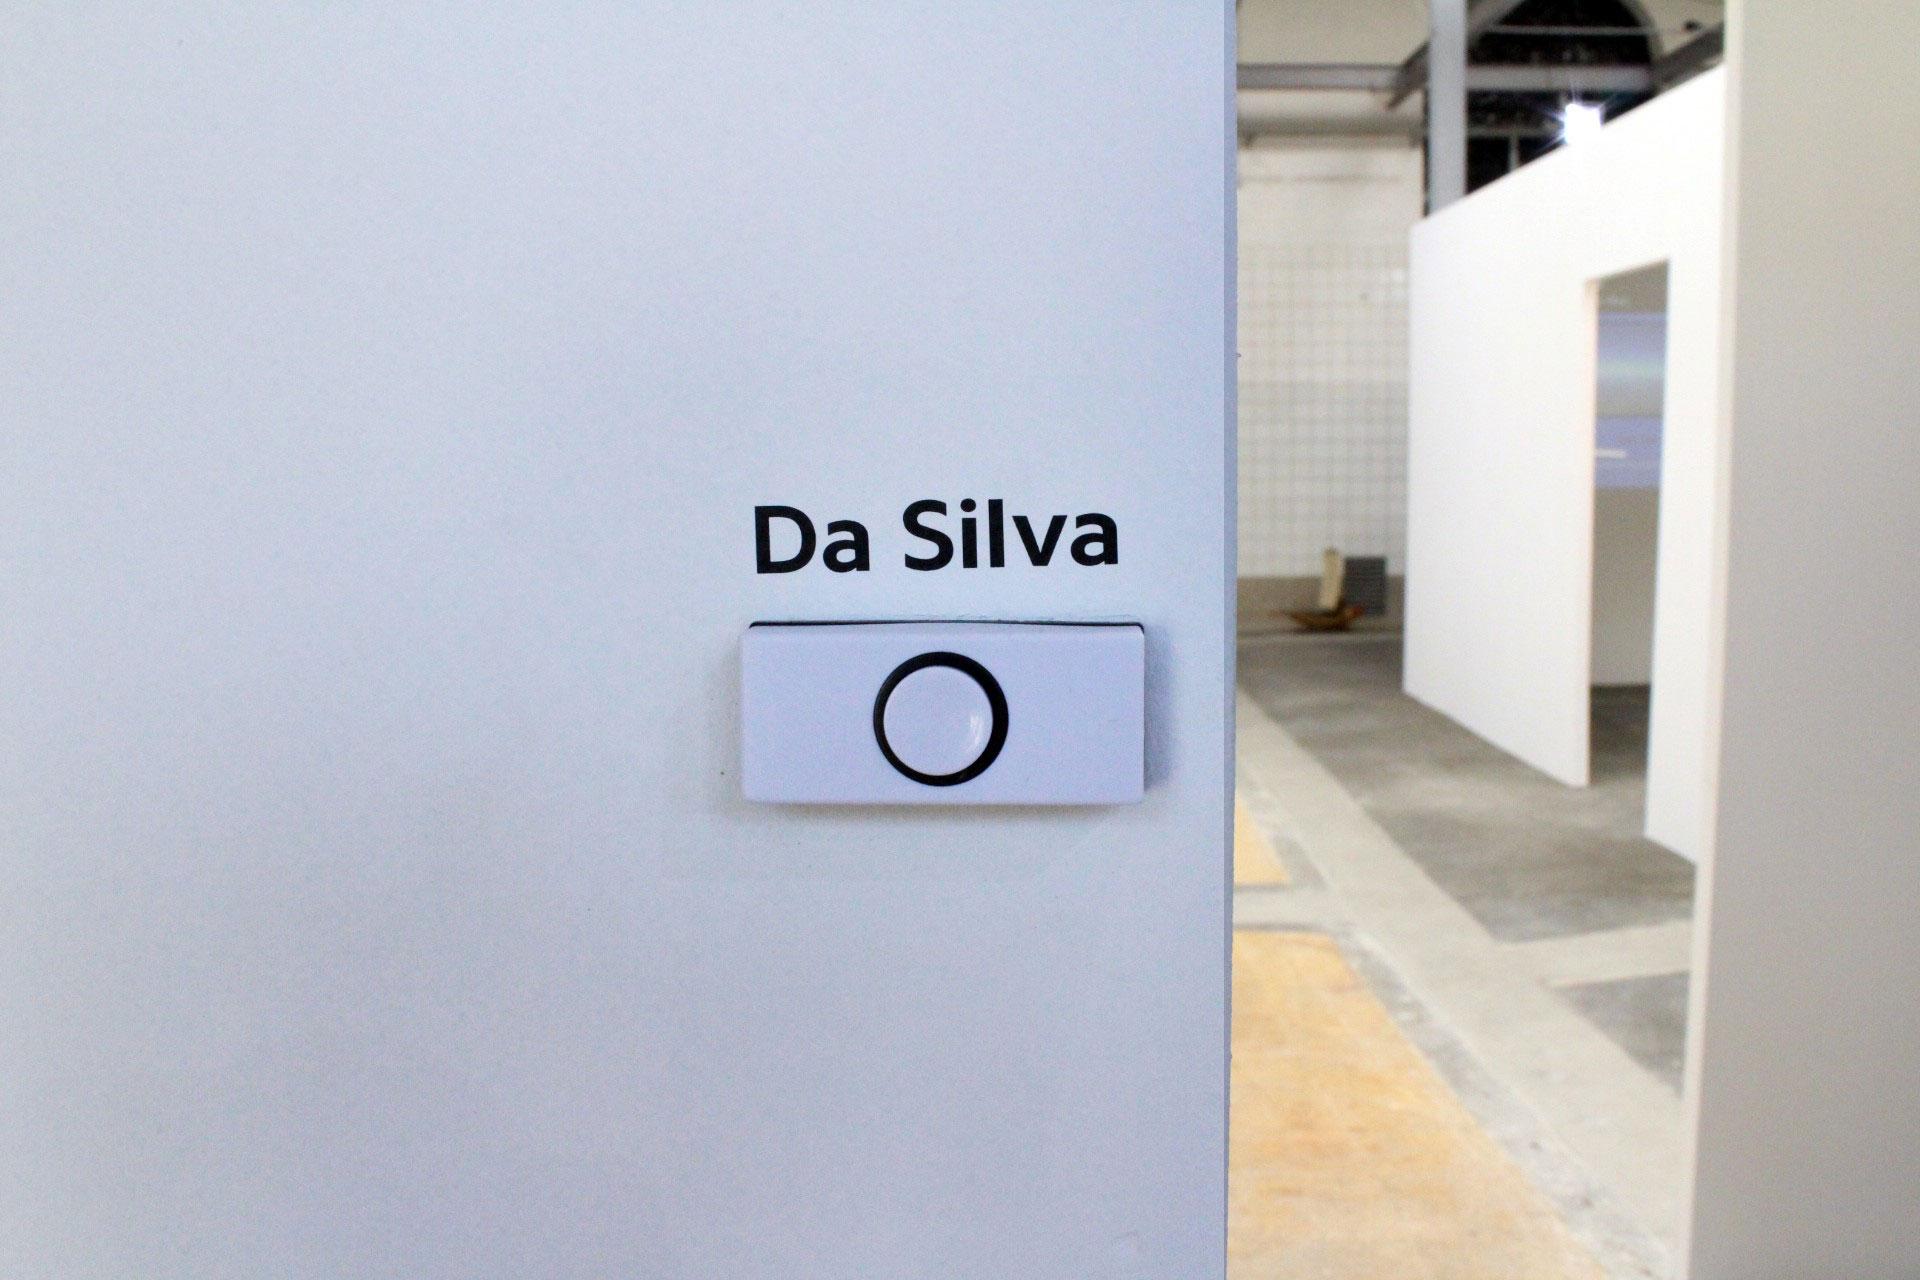 Le QG de La Chaux-de-Fonds devient l'appartement de la famille Da Silva. [QG - QG]